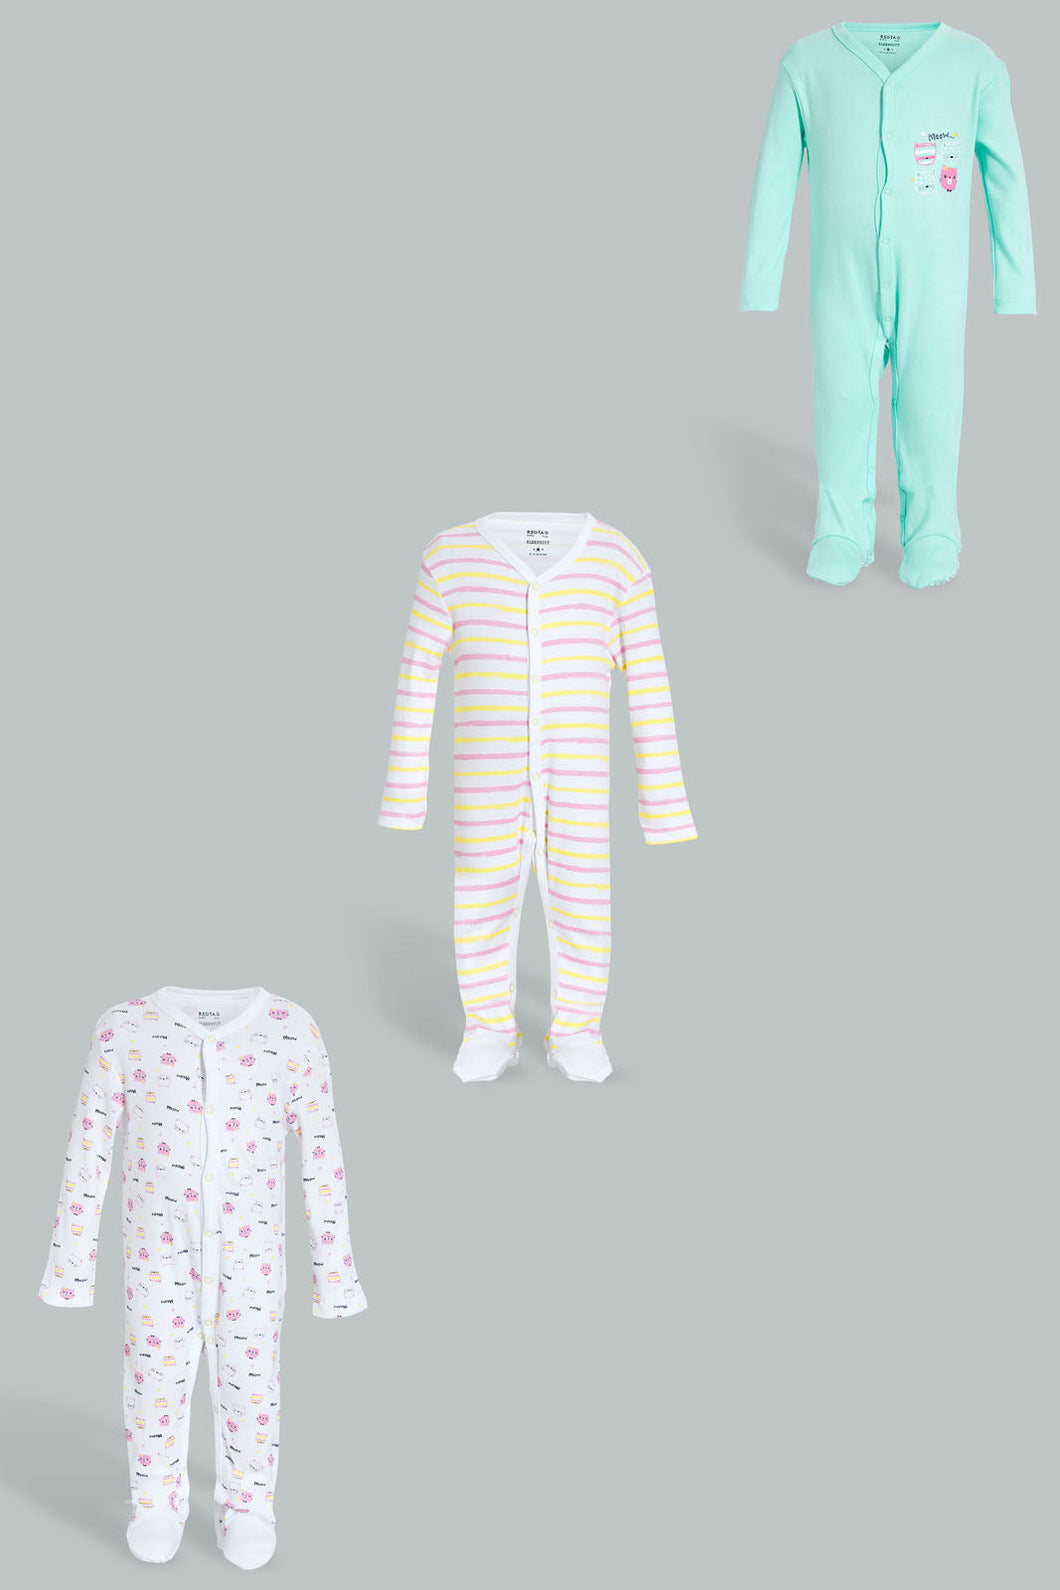 White And Mint Printed Sleepsuit Set (3 Piece) طقم بدل نوم باللوني الأبيض والنعناعي بتصميم مطبوع (من 3 قطع)